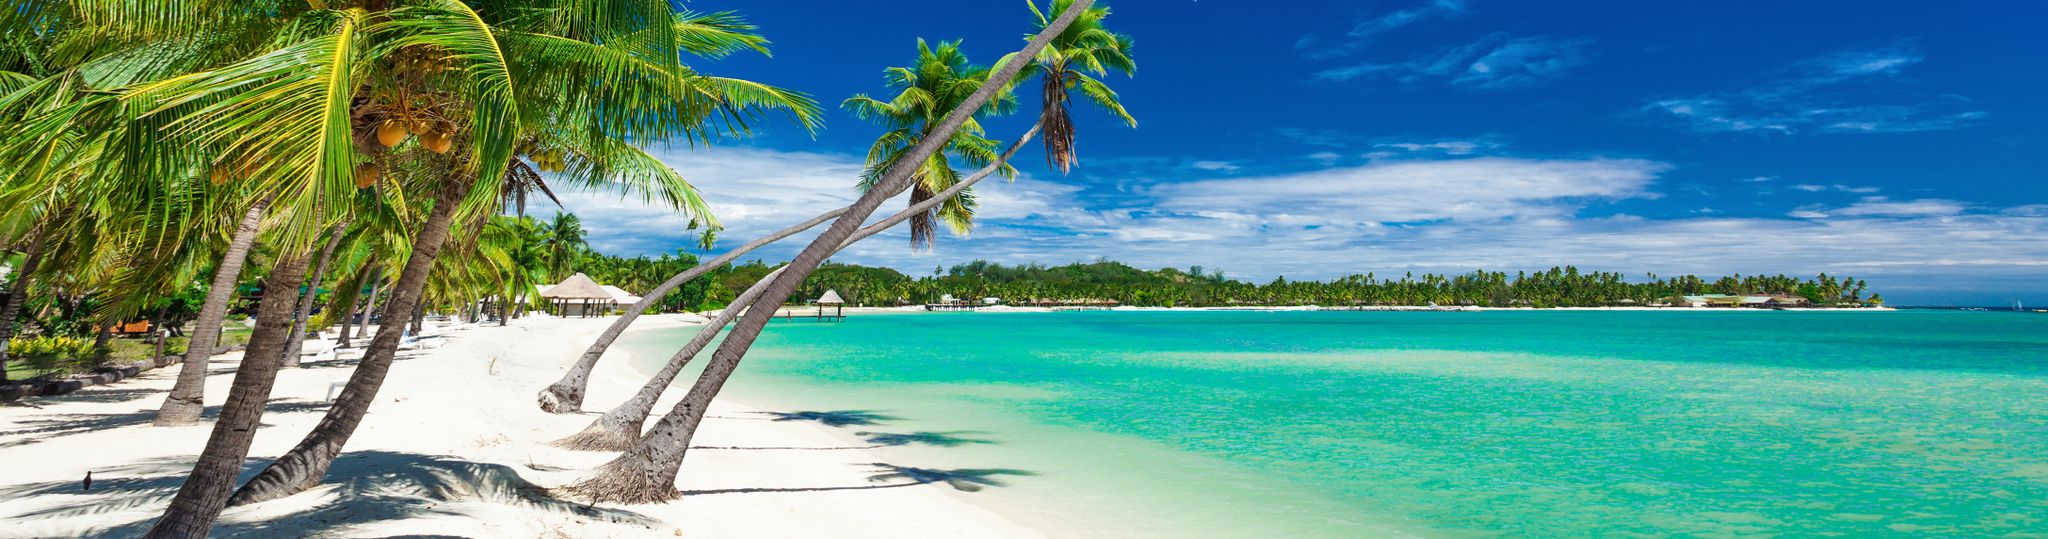 Fiji Holiday Packages Jetstar Holidays